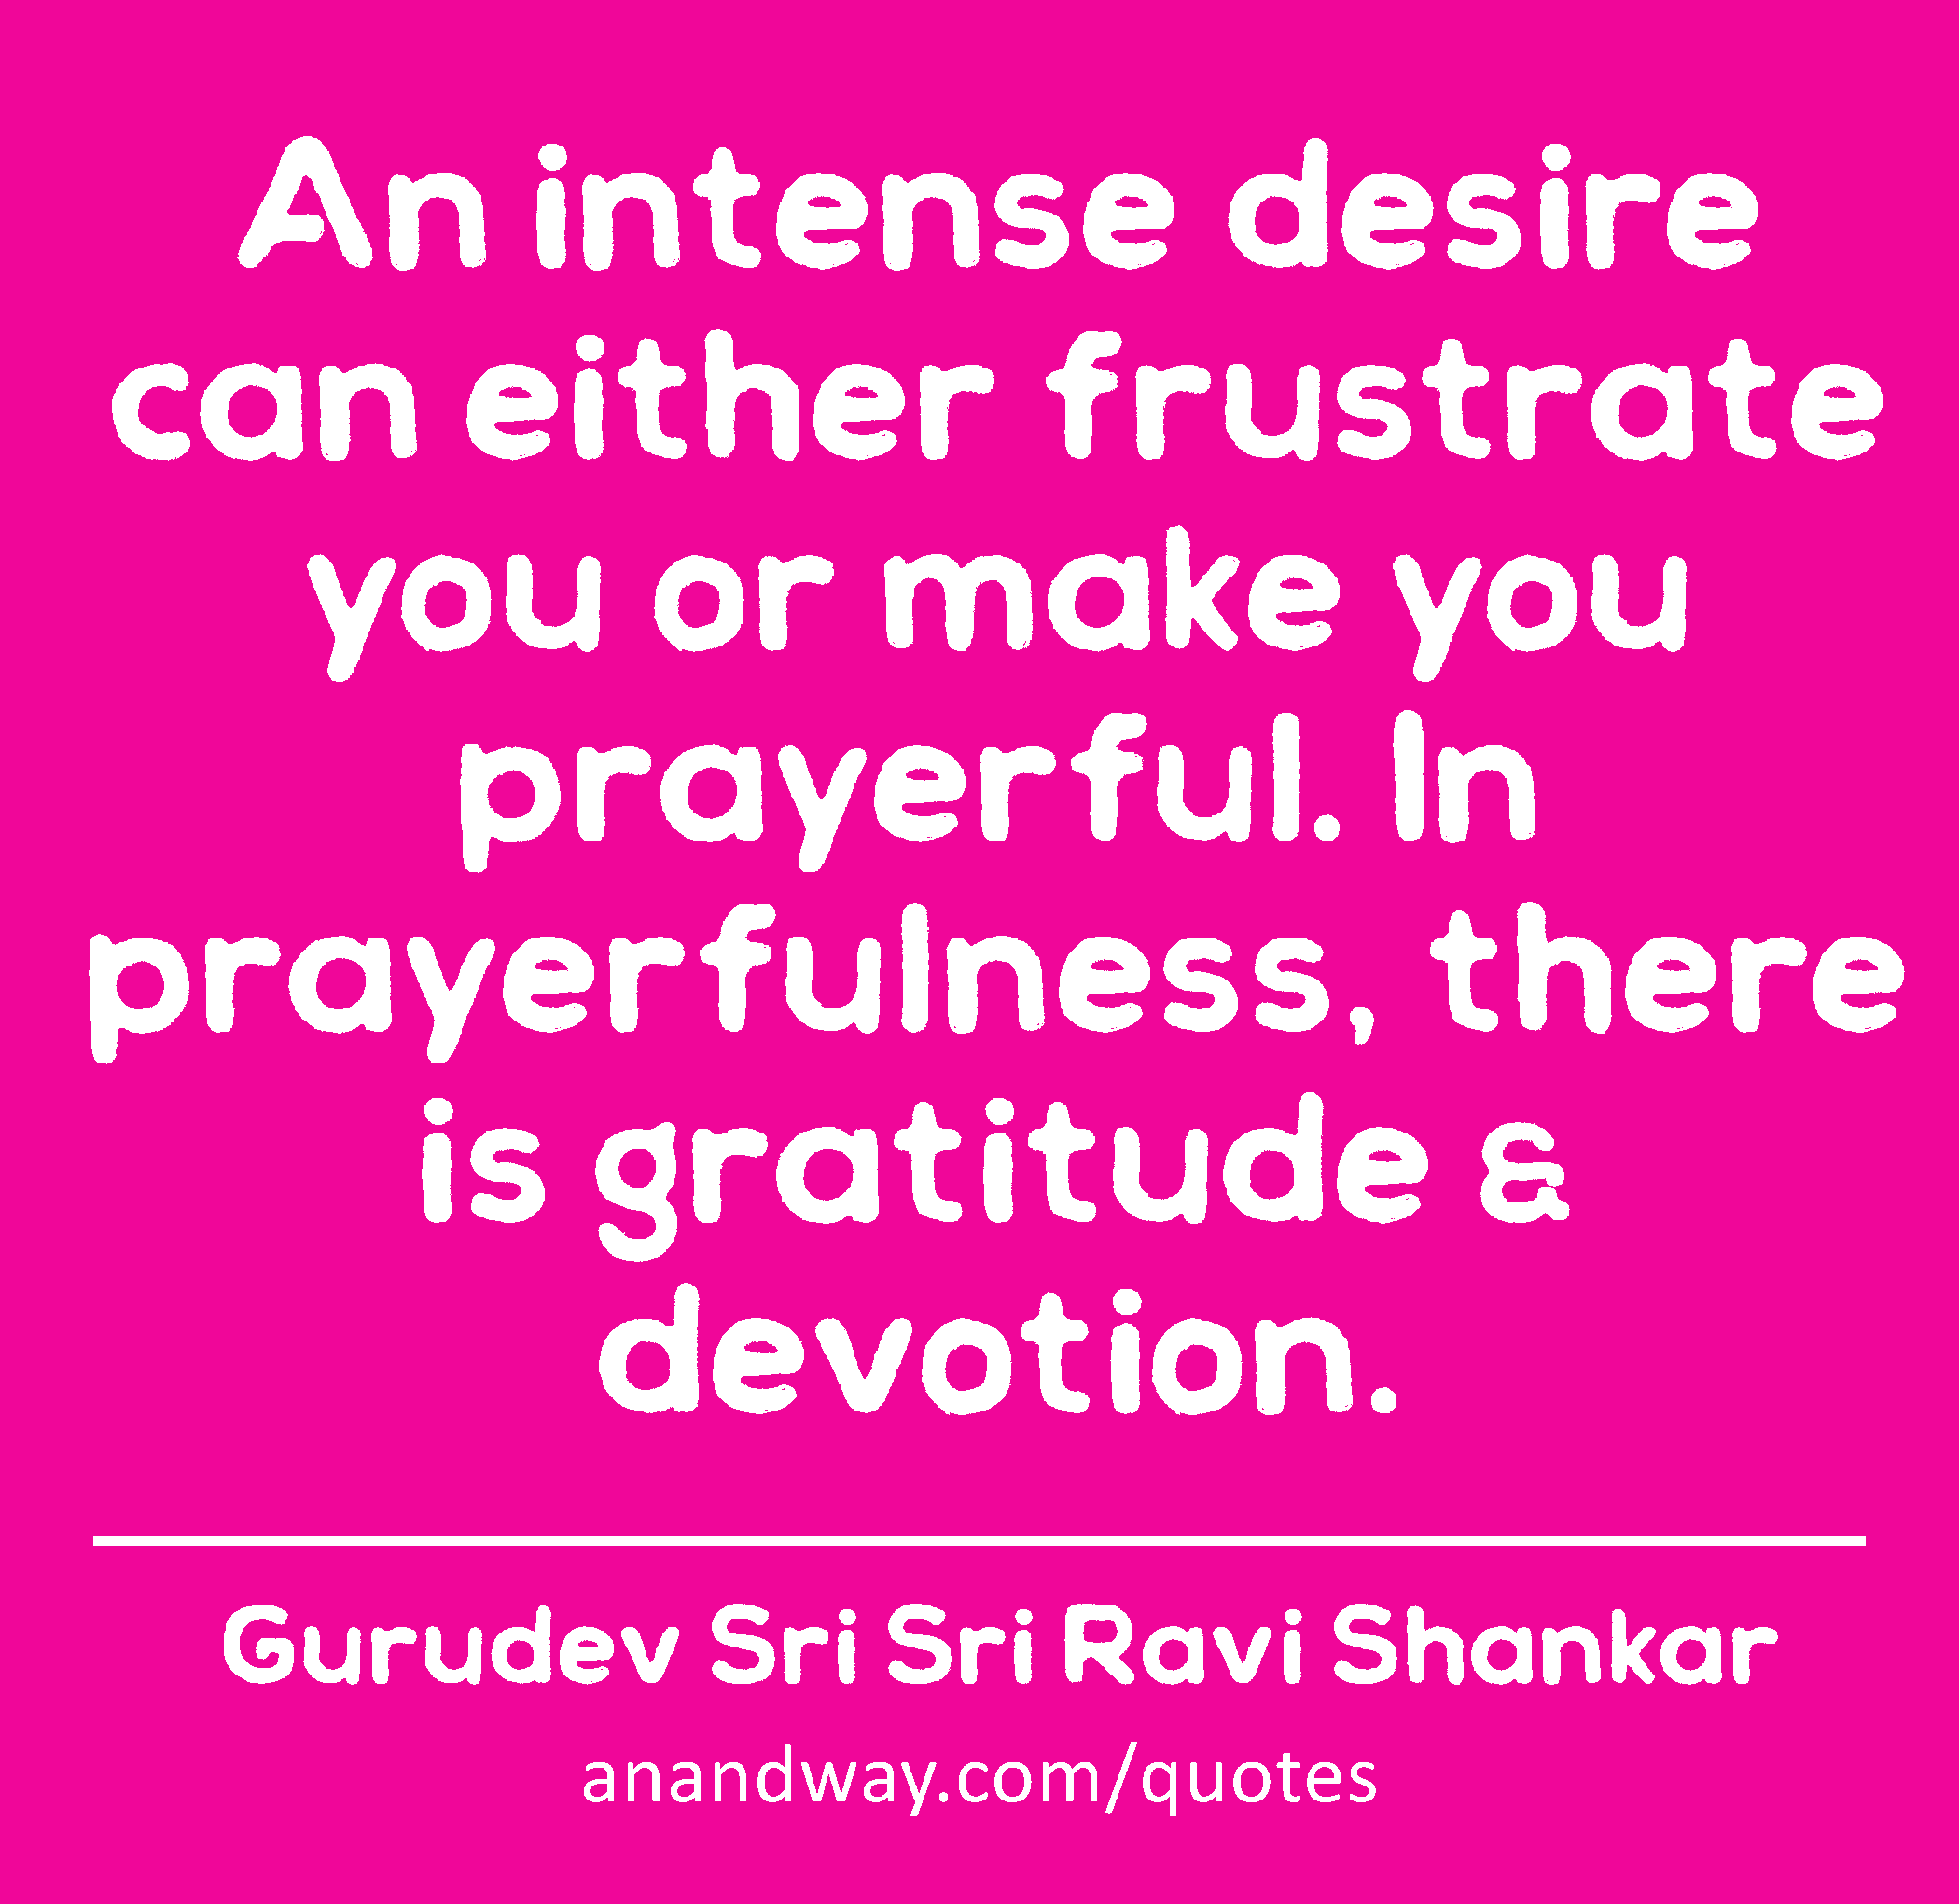 An intense desire can either frustrate you or make you prayerful. In prayerfulness, there is
 -Gurudev Sri Sri Ravi Shankar